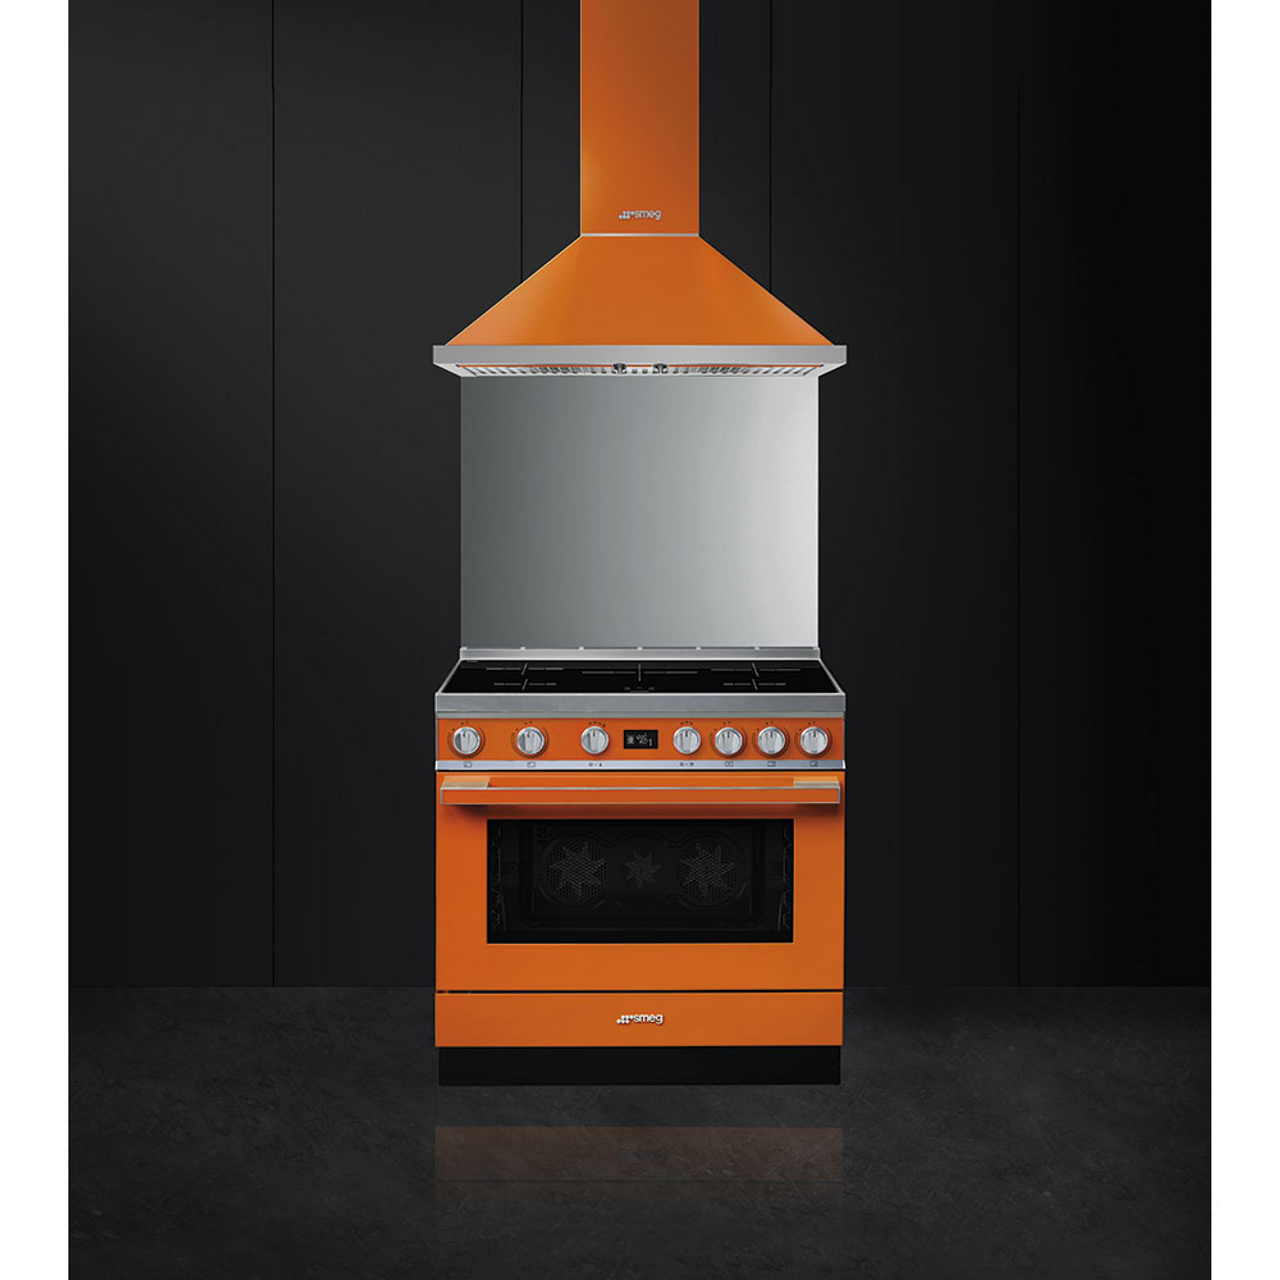 CPF9IPOR - 90cm Portofino Freestanding Cooker, 5 Zone Induction, Pyrolytic Cleaning - Burnt Orange